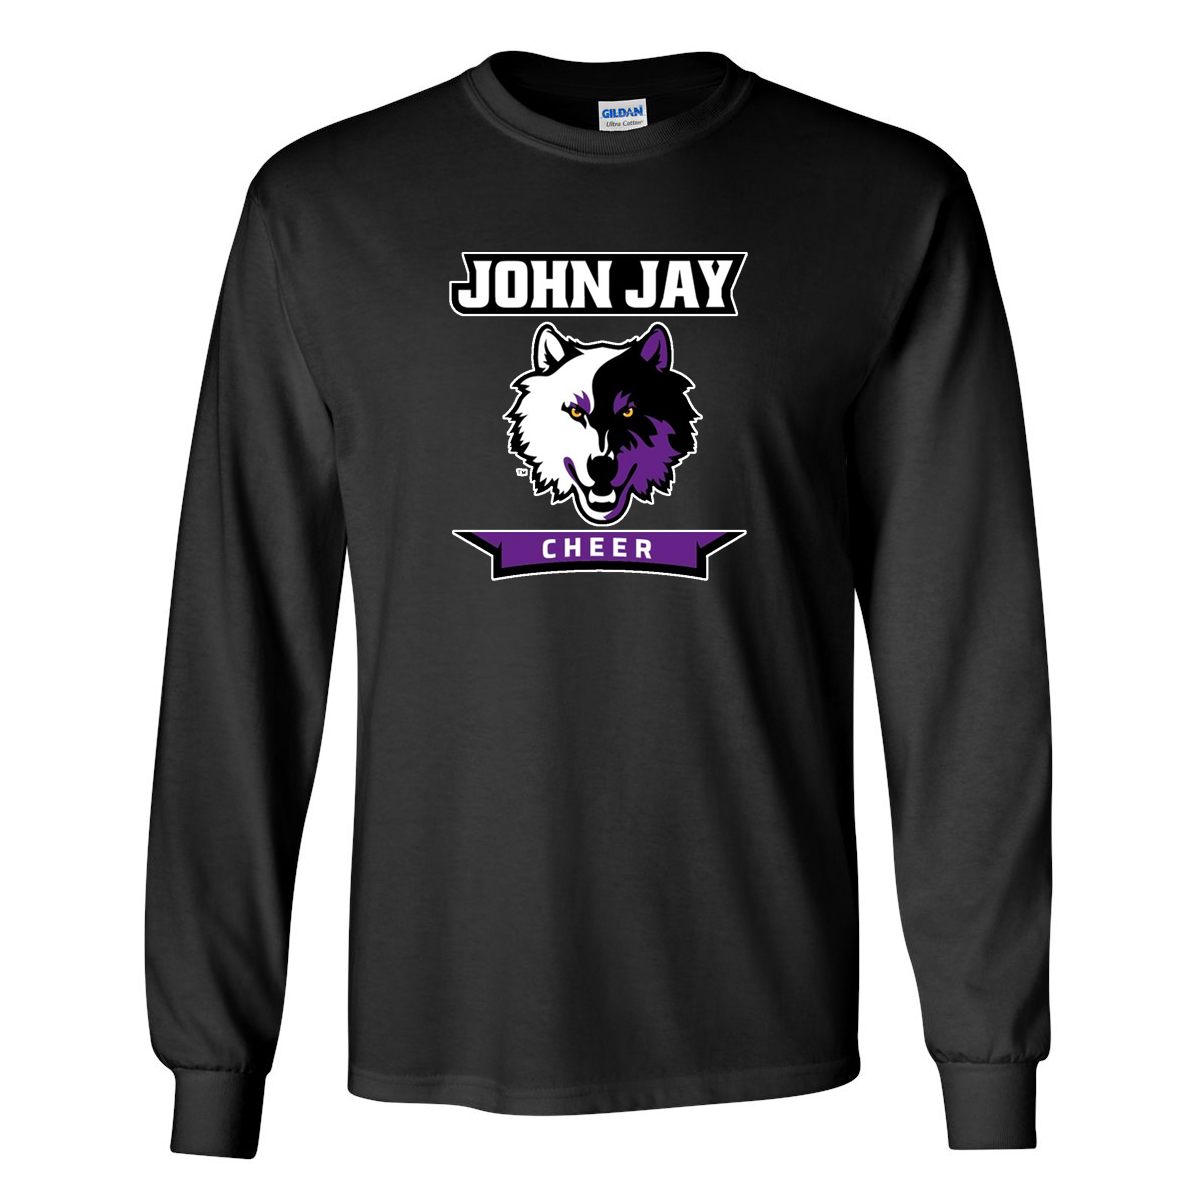 John Jay Youth Cheer Ultra Cotton Long Sleeve Shirt